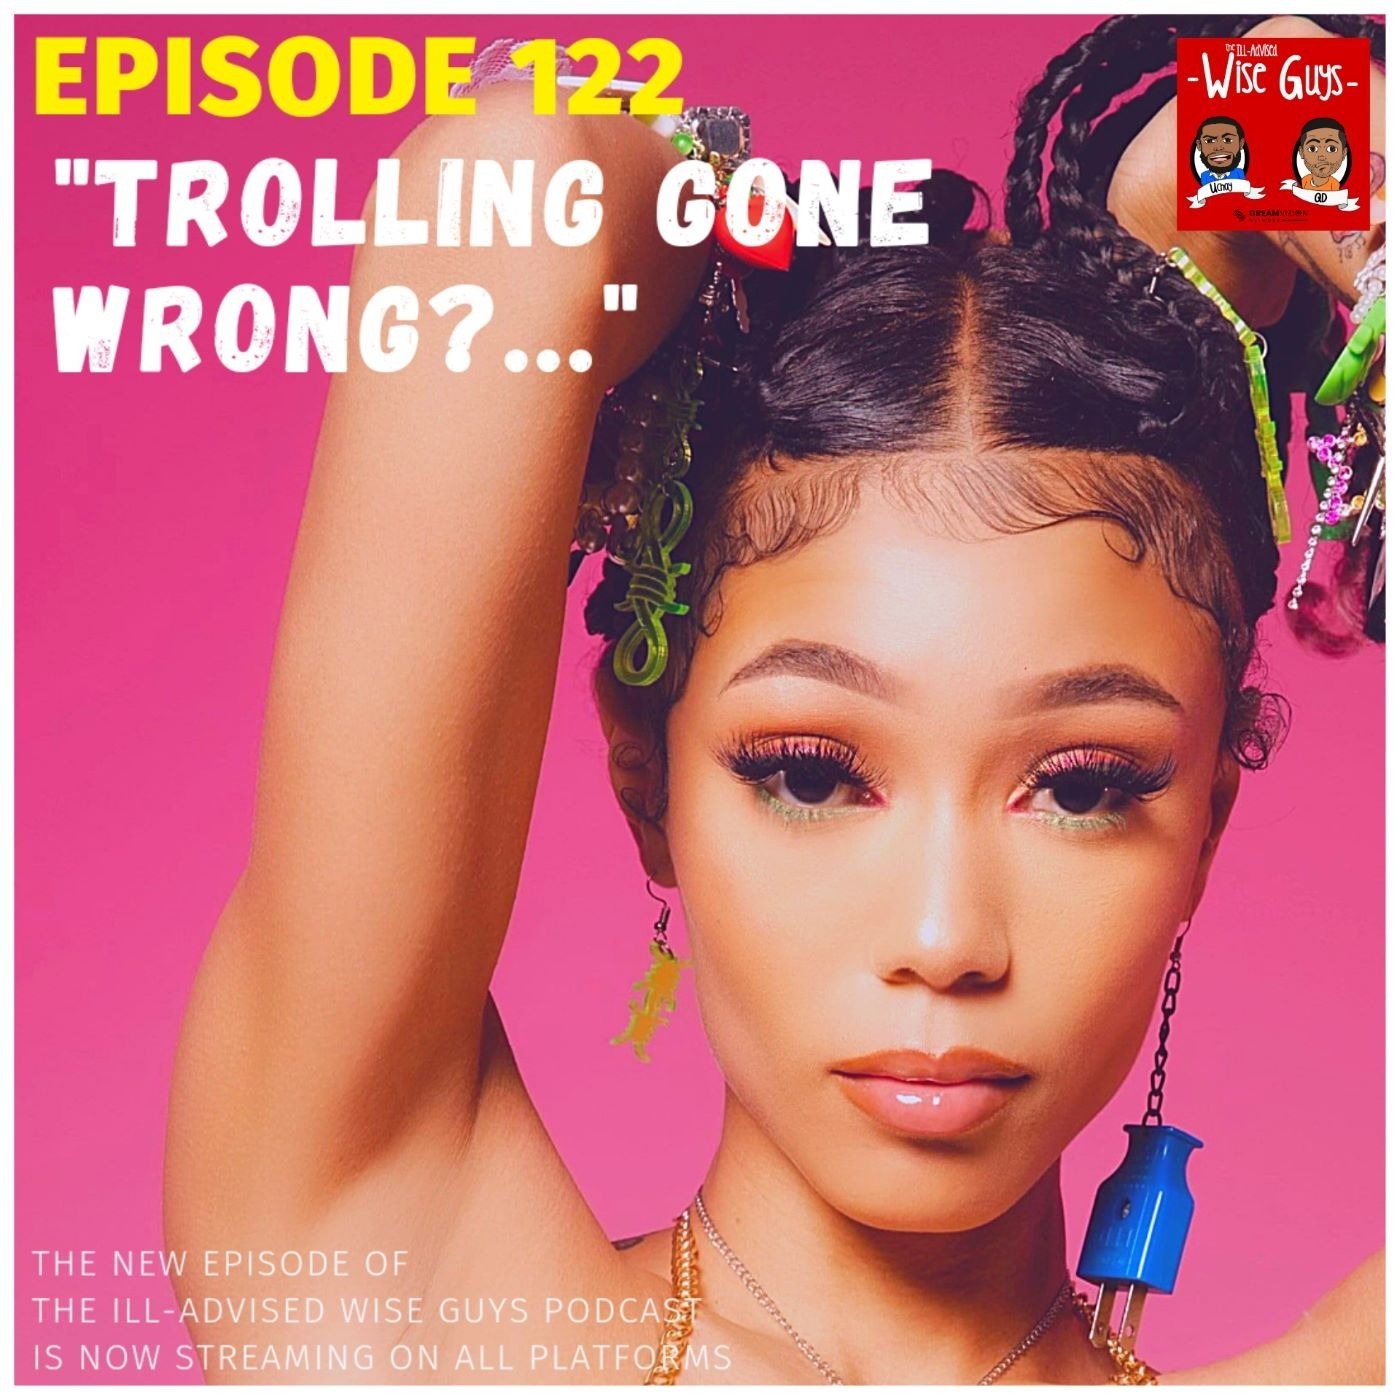 Episode 122 - "Trolling Gone Wrong?..."